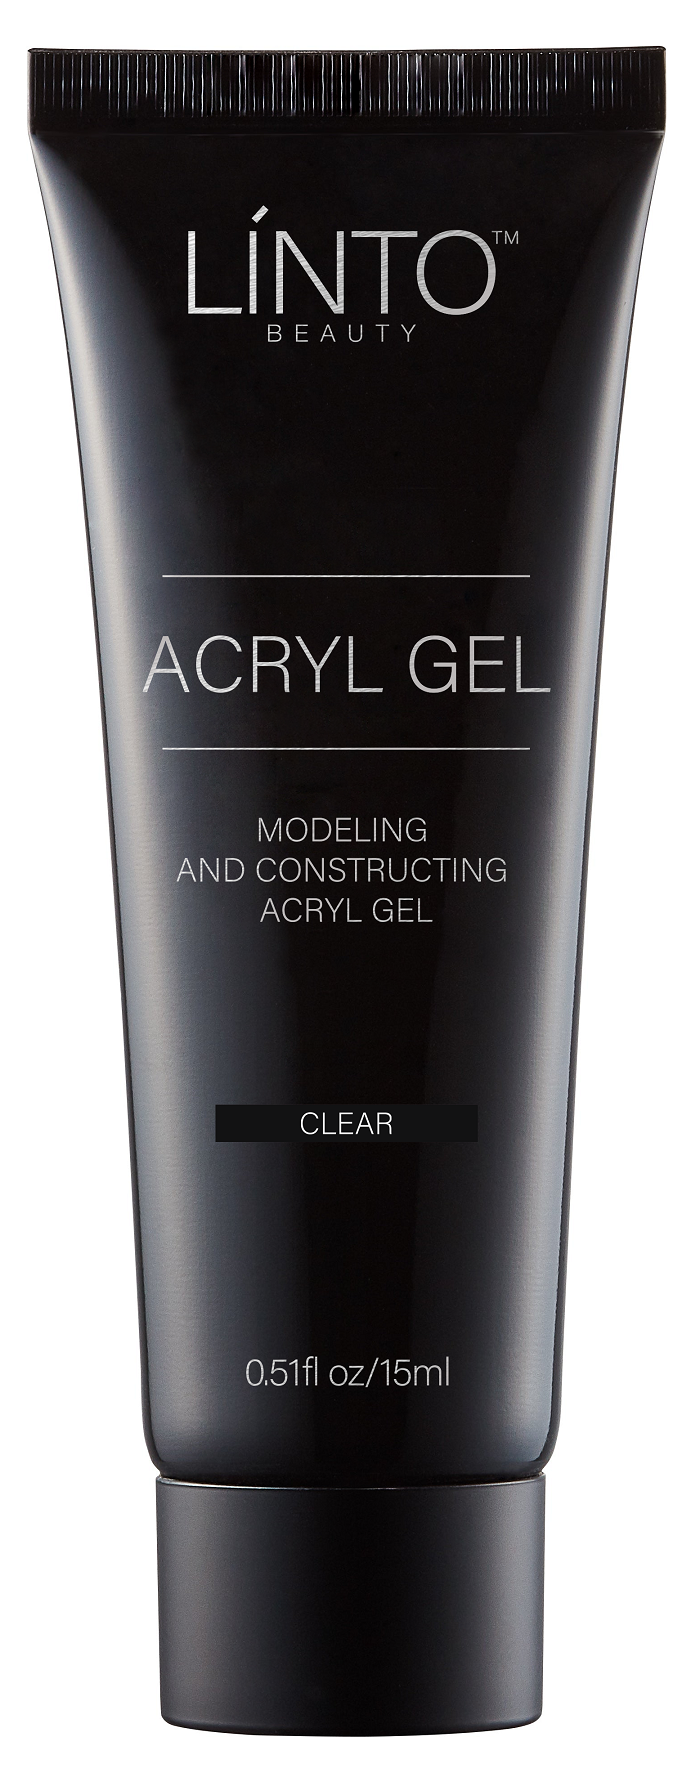 Acryl gel clear by LiNTO